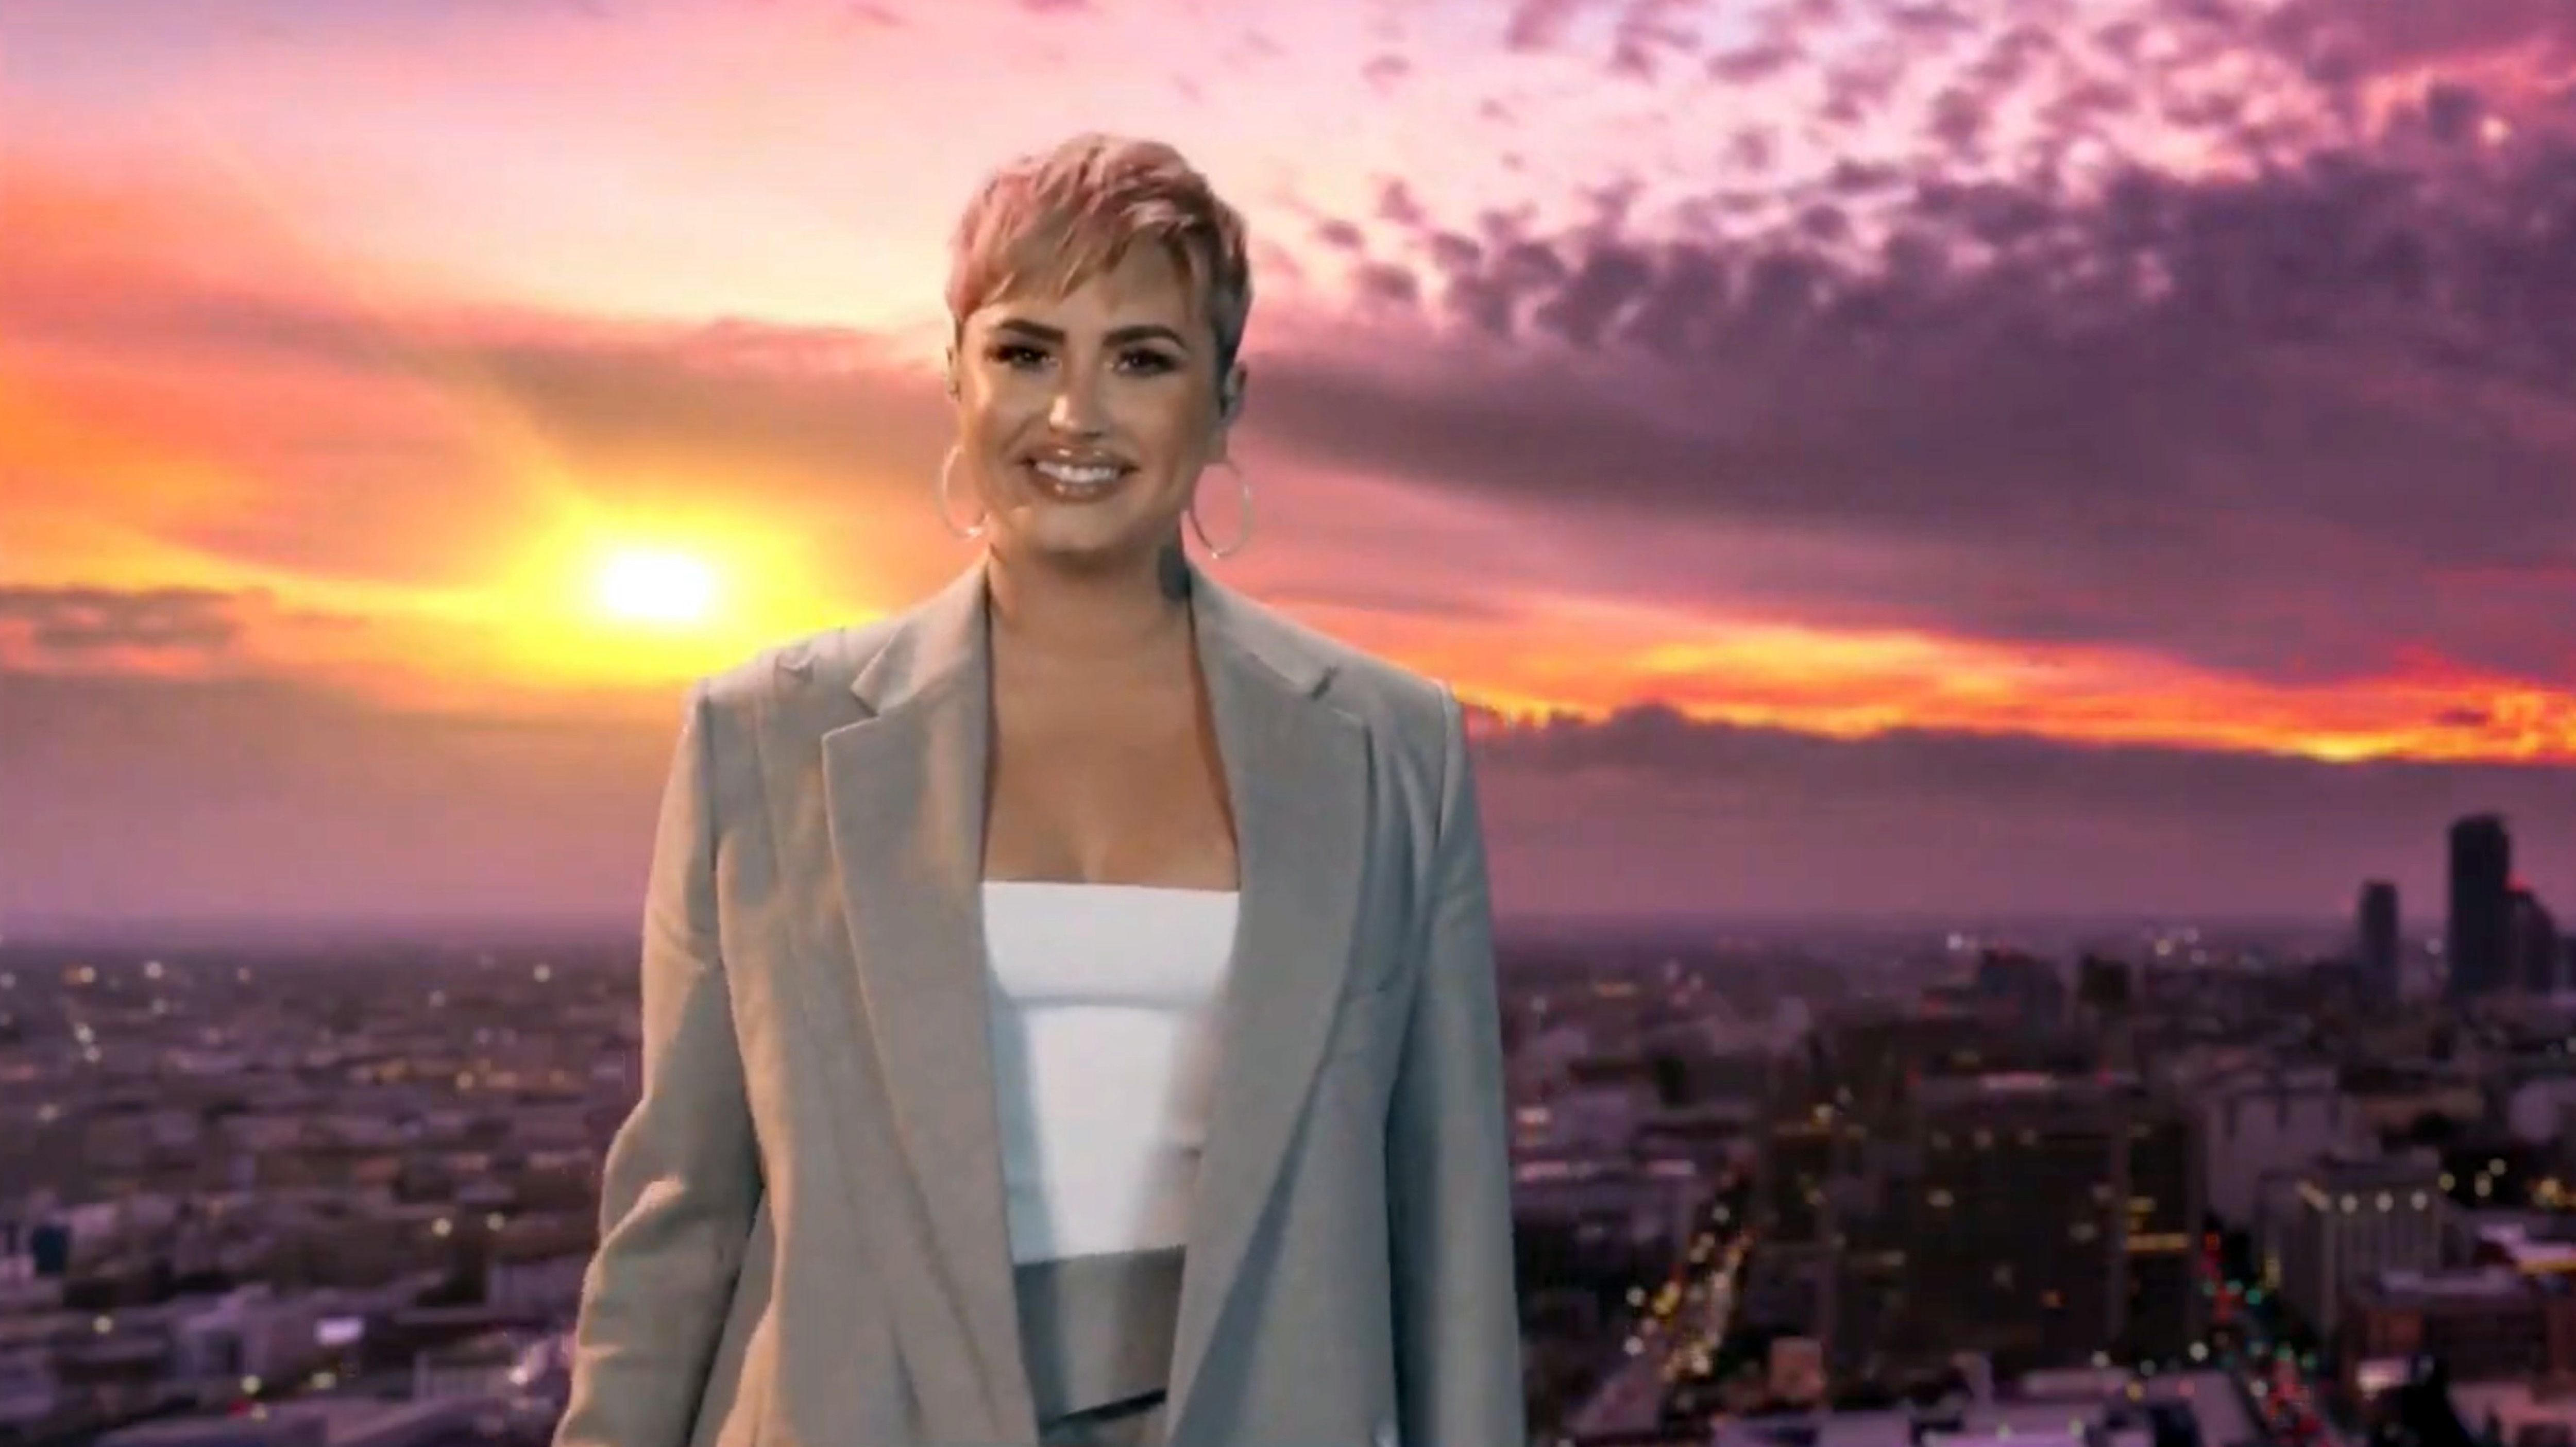 Demi Lovato wears a white shirt and gray blazer.